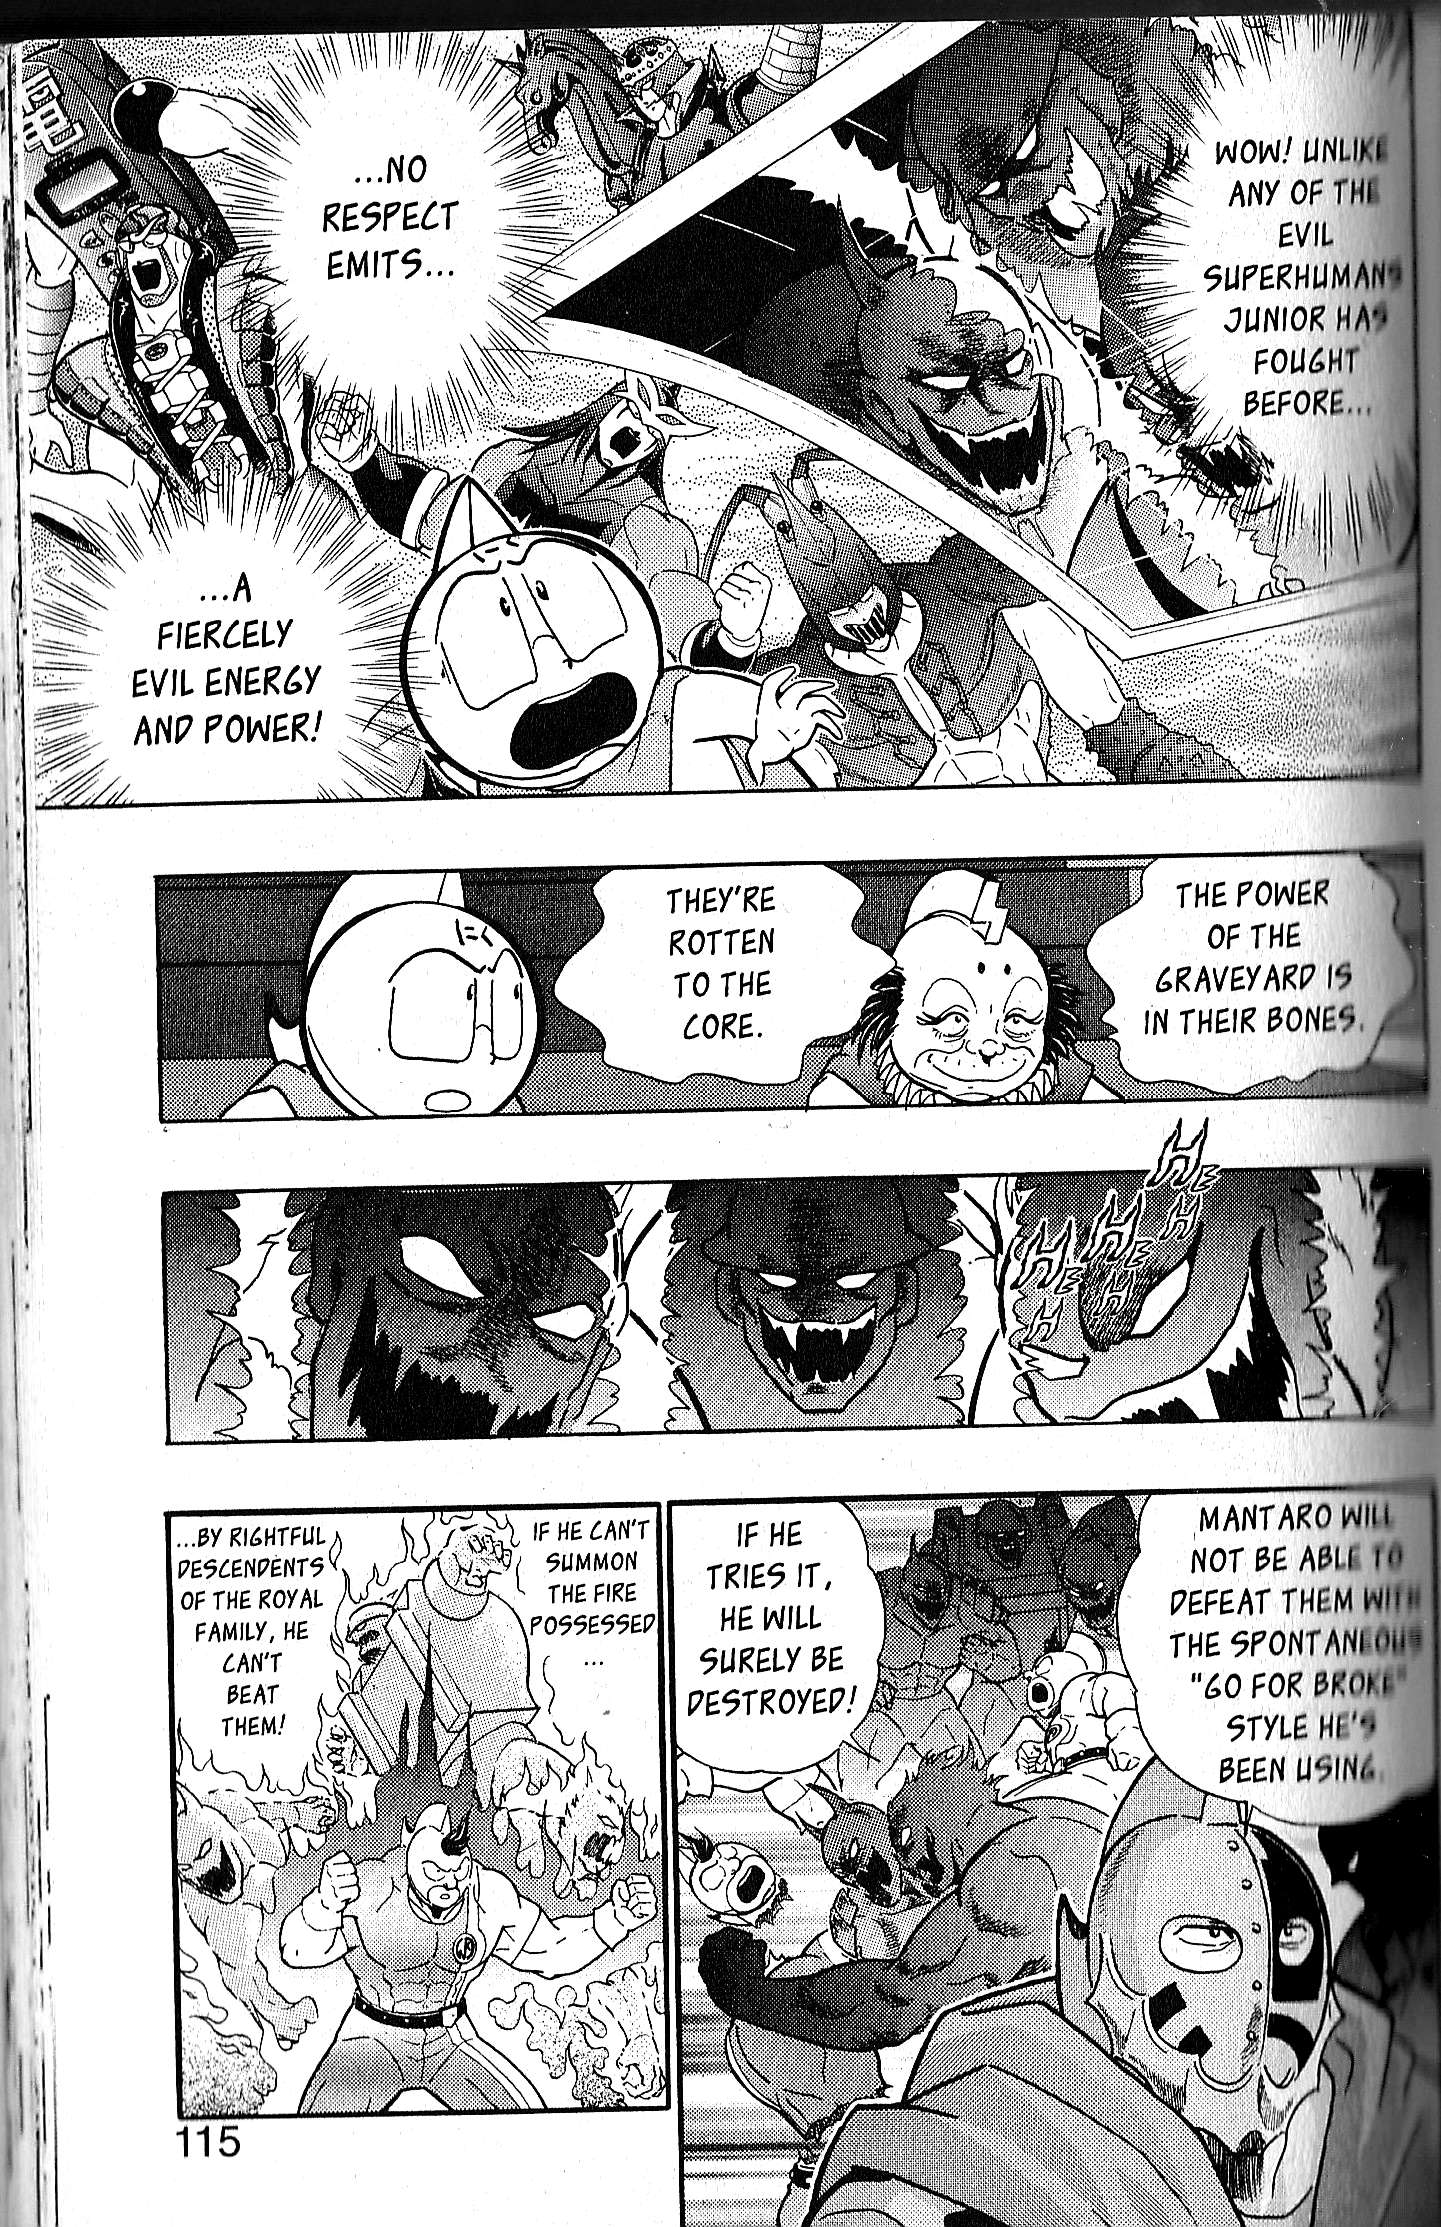 Kinnikuman II Sei - 2nd Generation - chapter 81 - #3